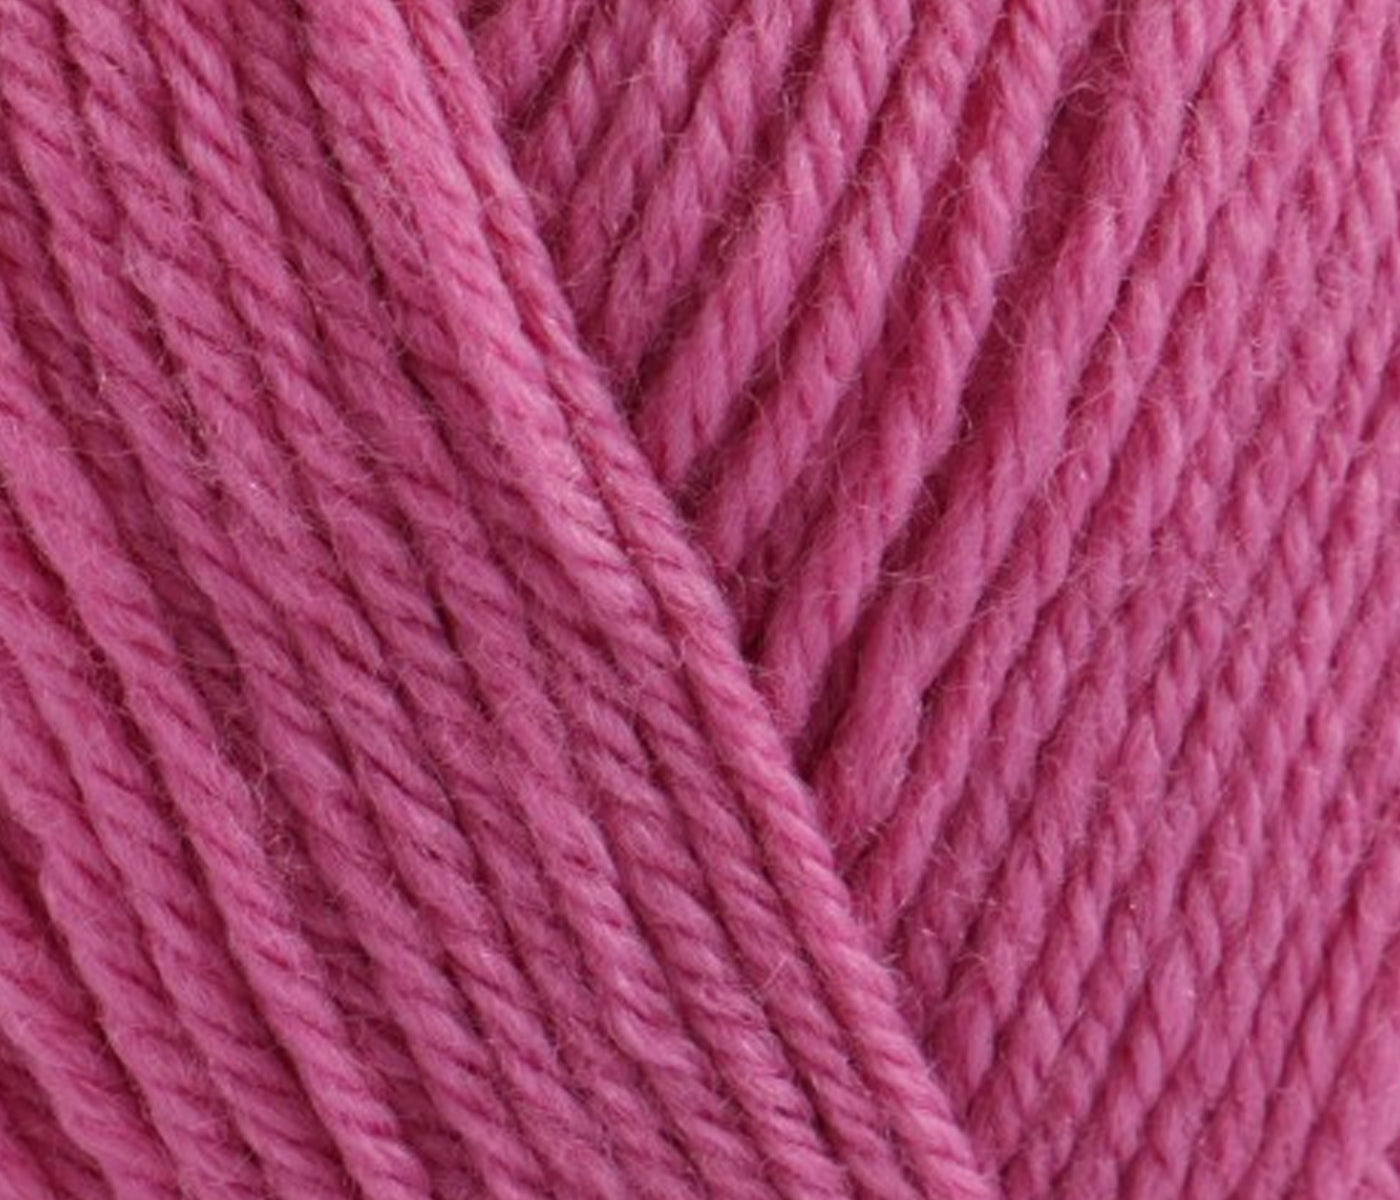 Constellation Beret | Knitting Kit